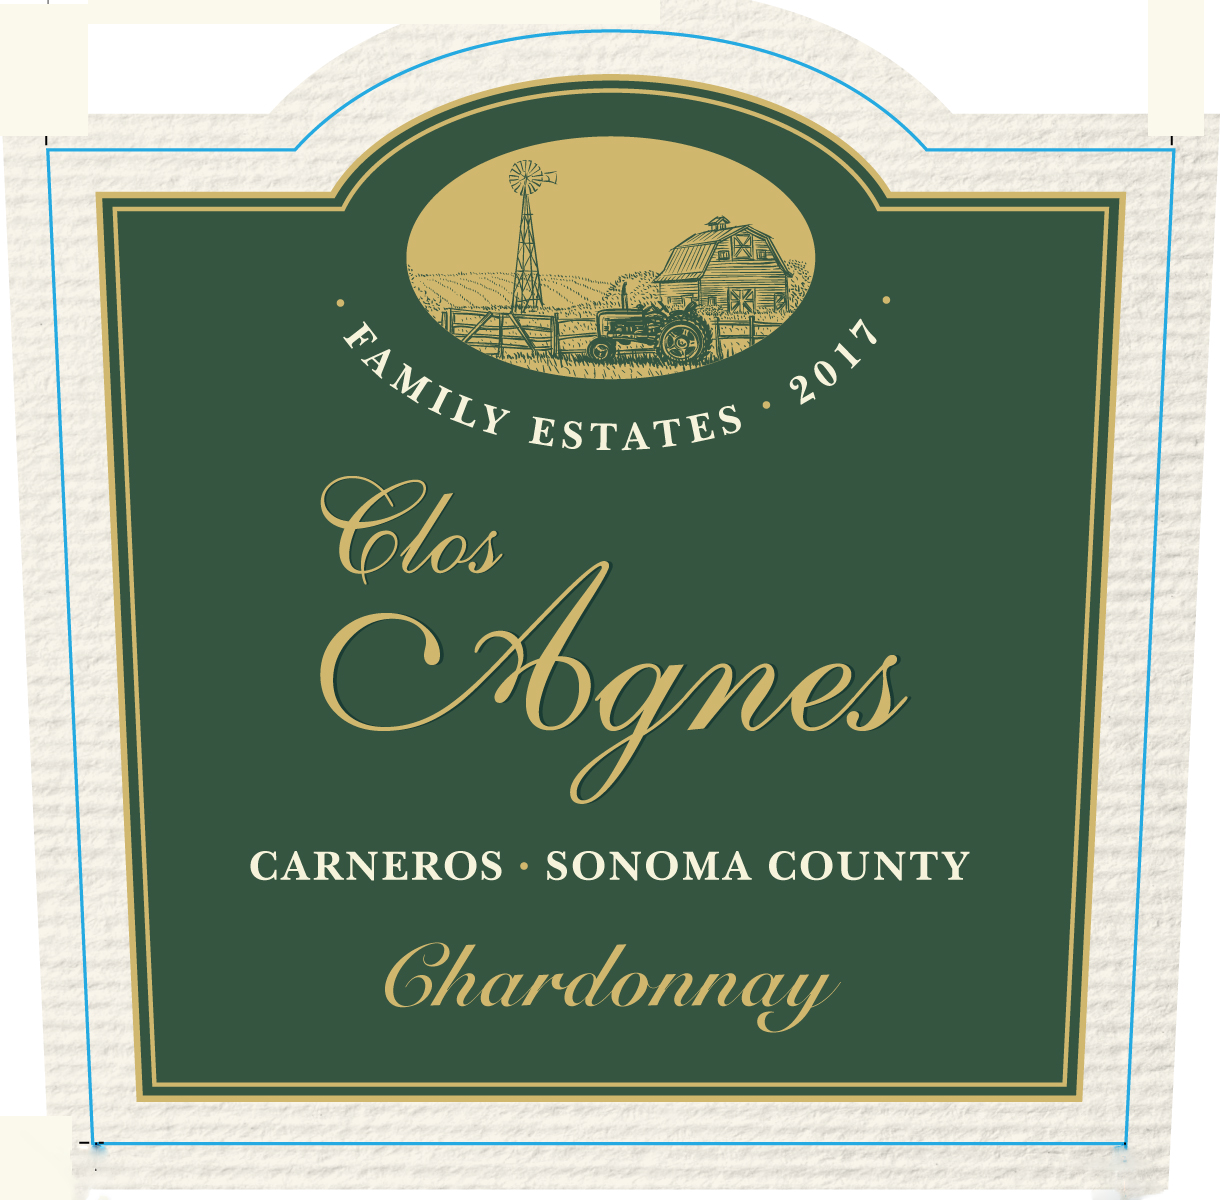 Clos Agnes - Chardonnay label